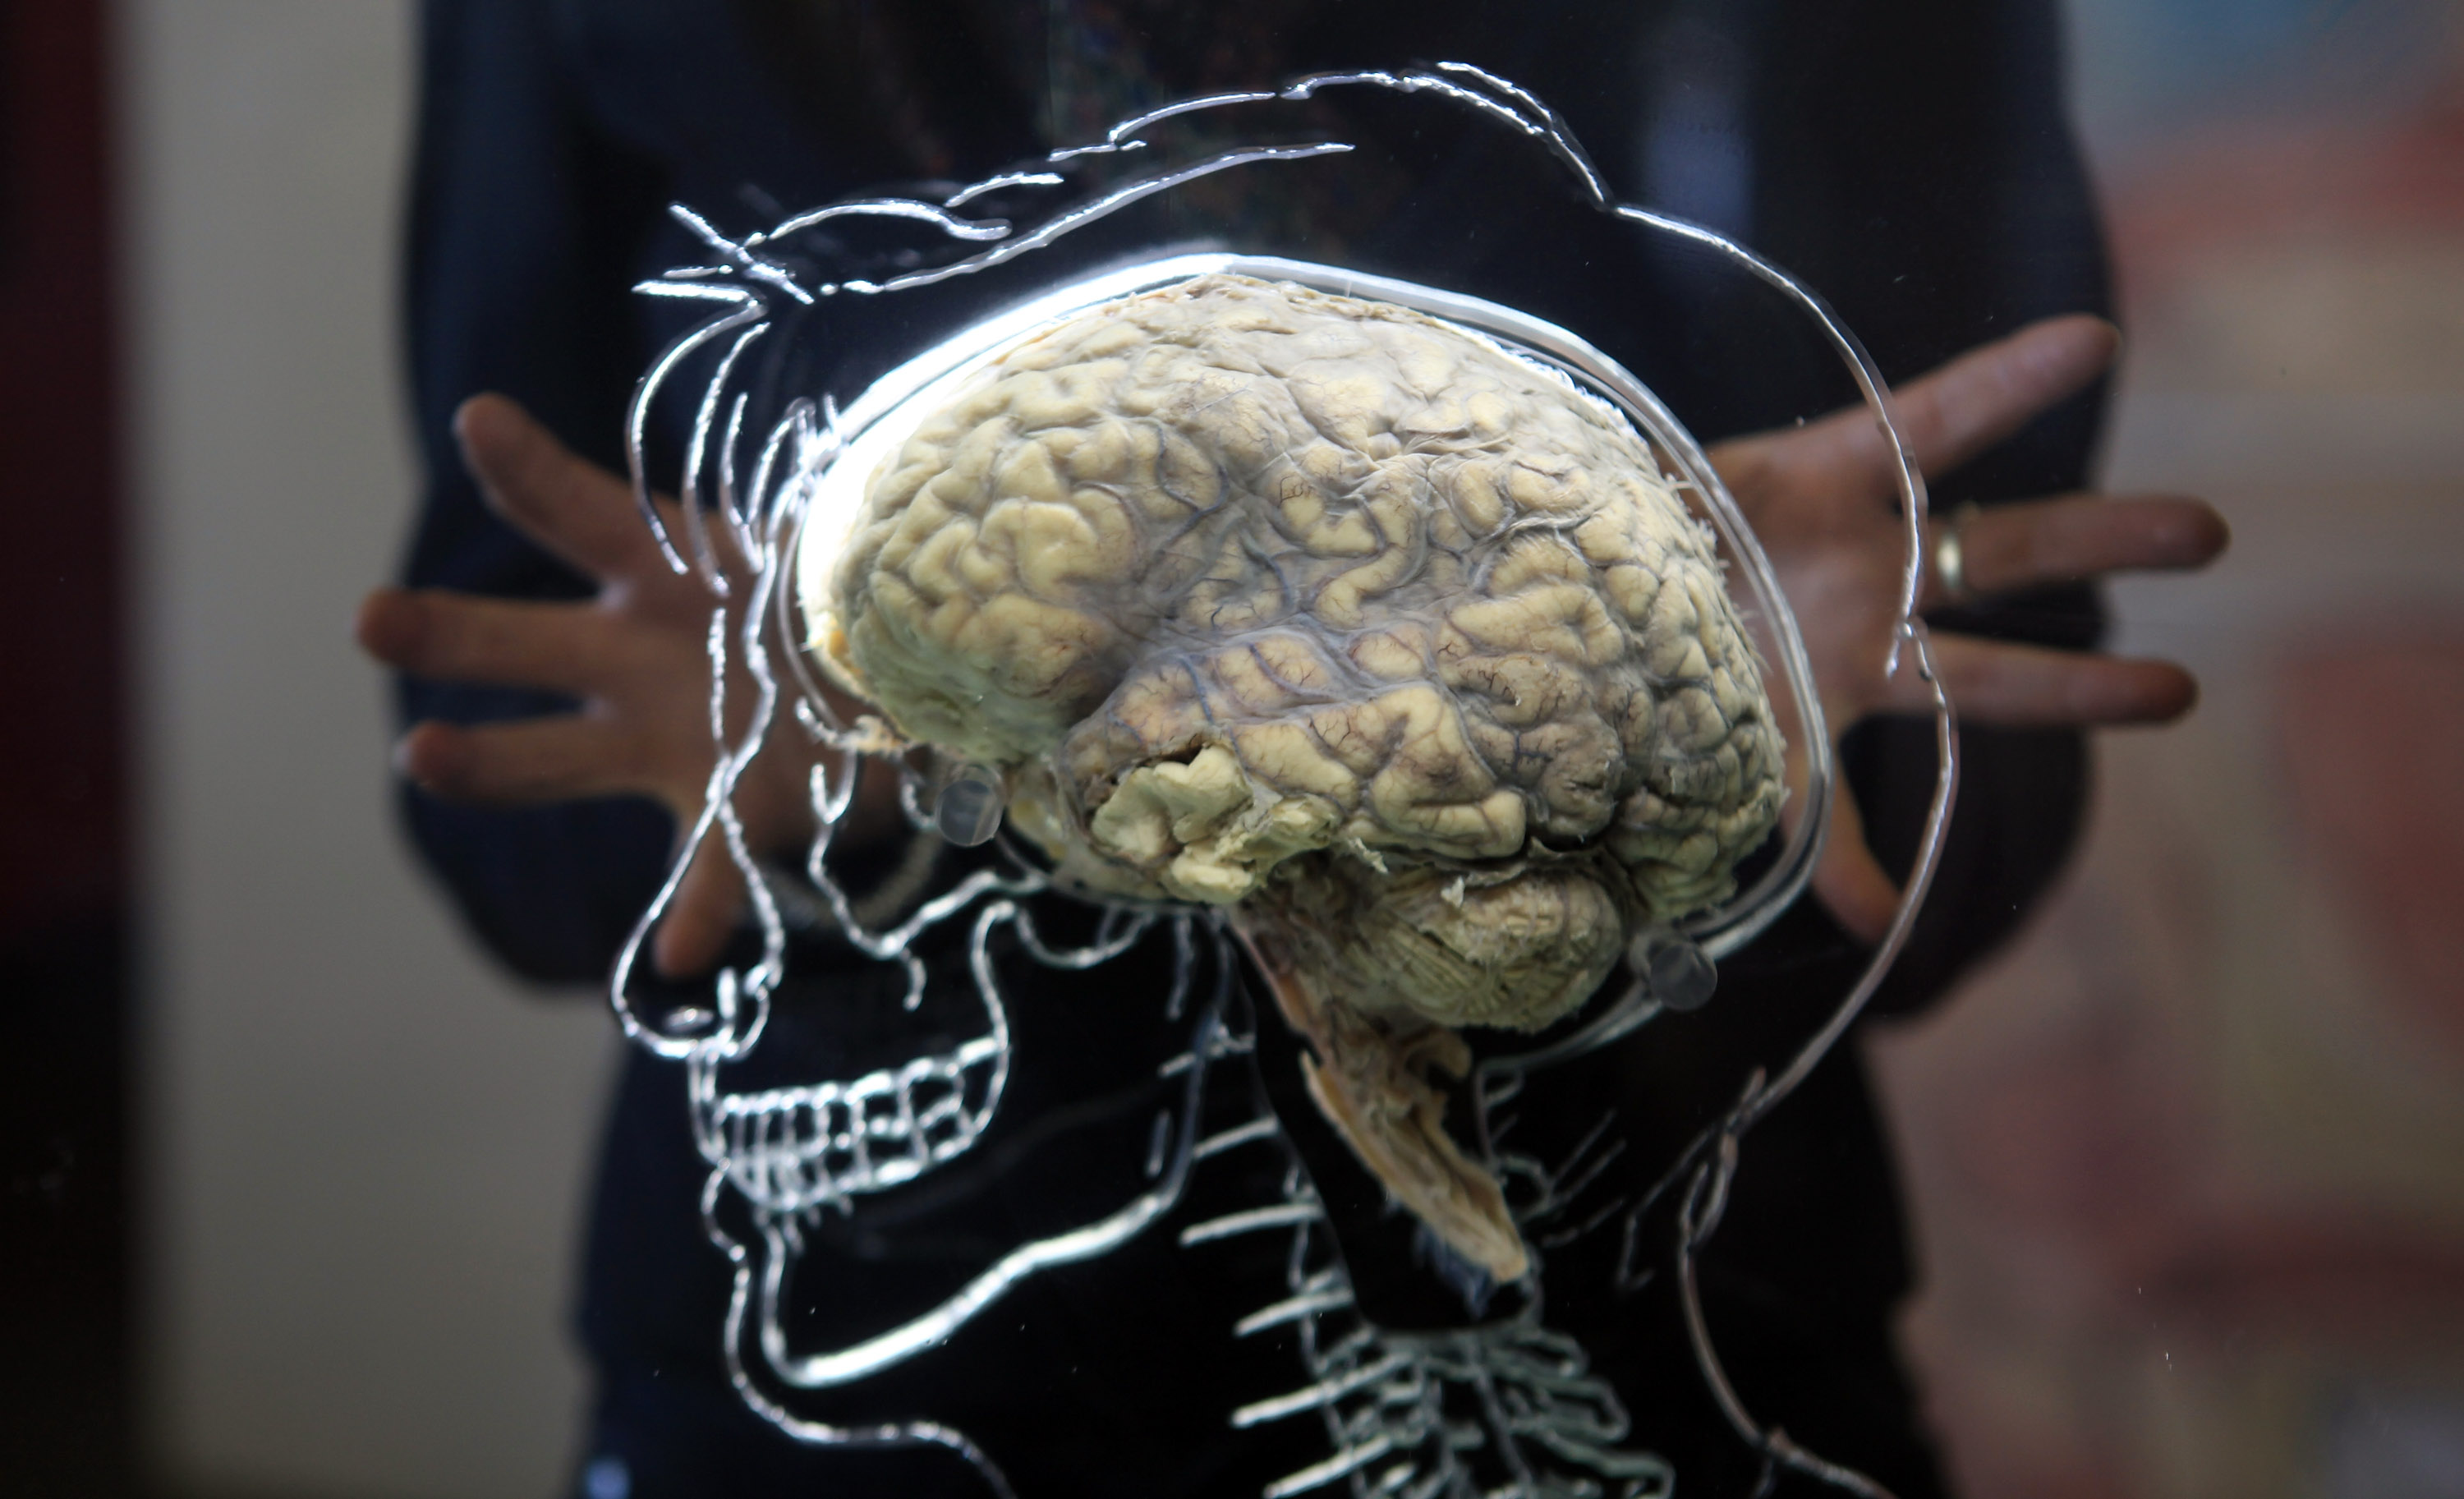 Фото мозг людей